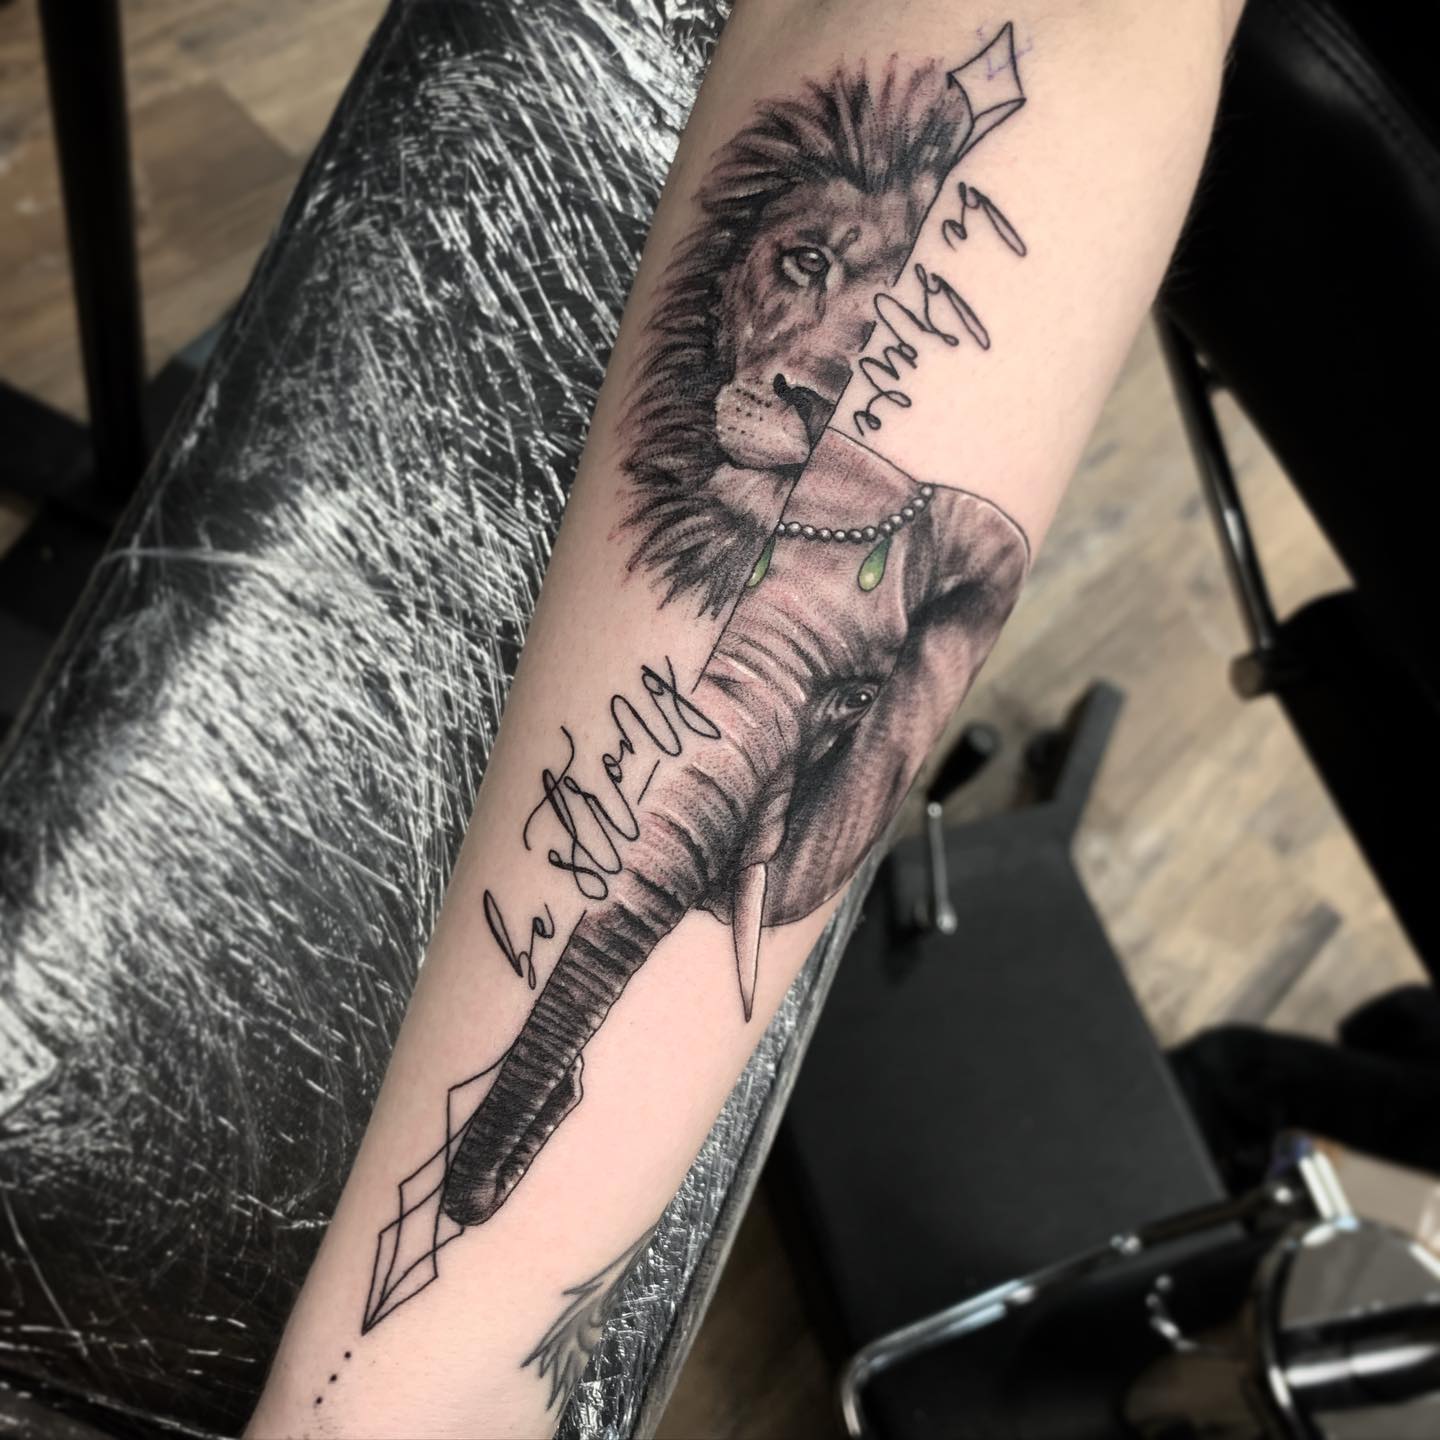 Tatuaje de Elefante y León